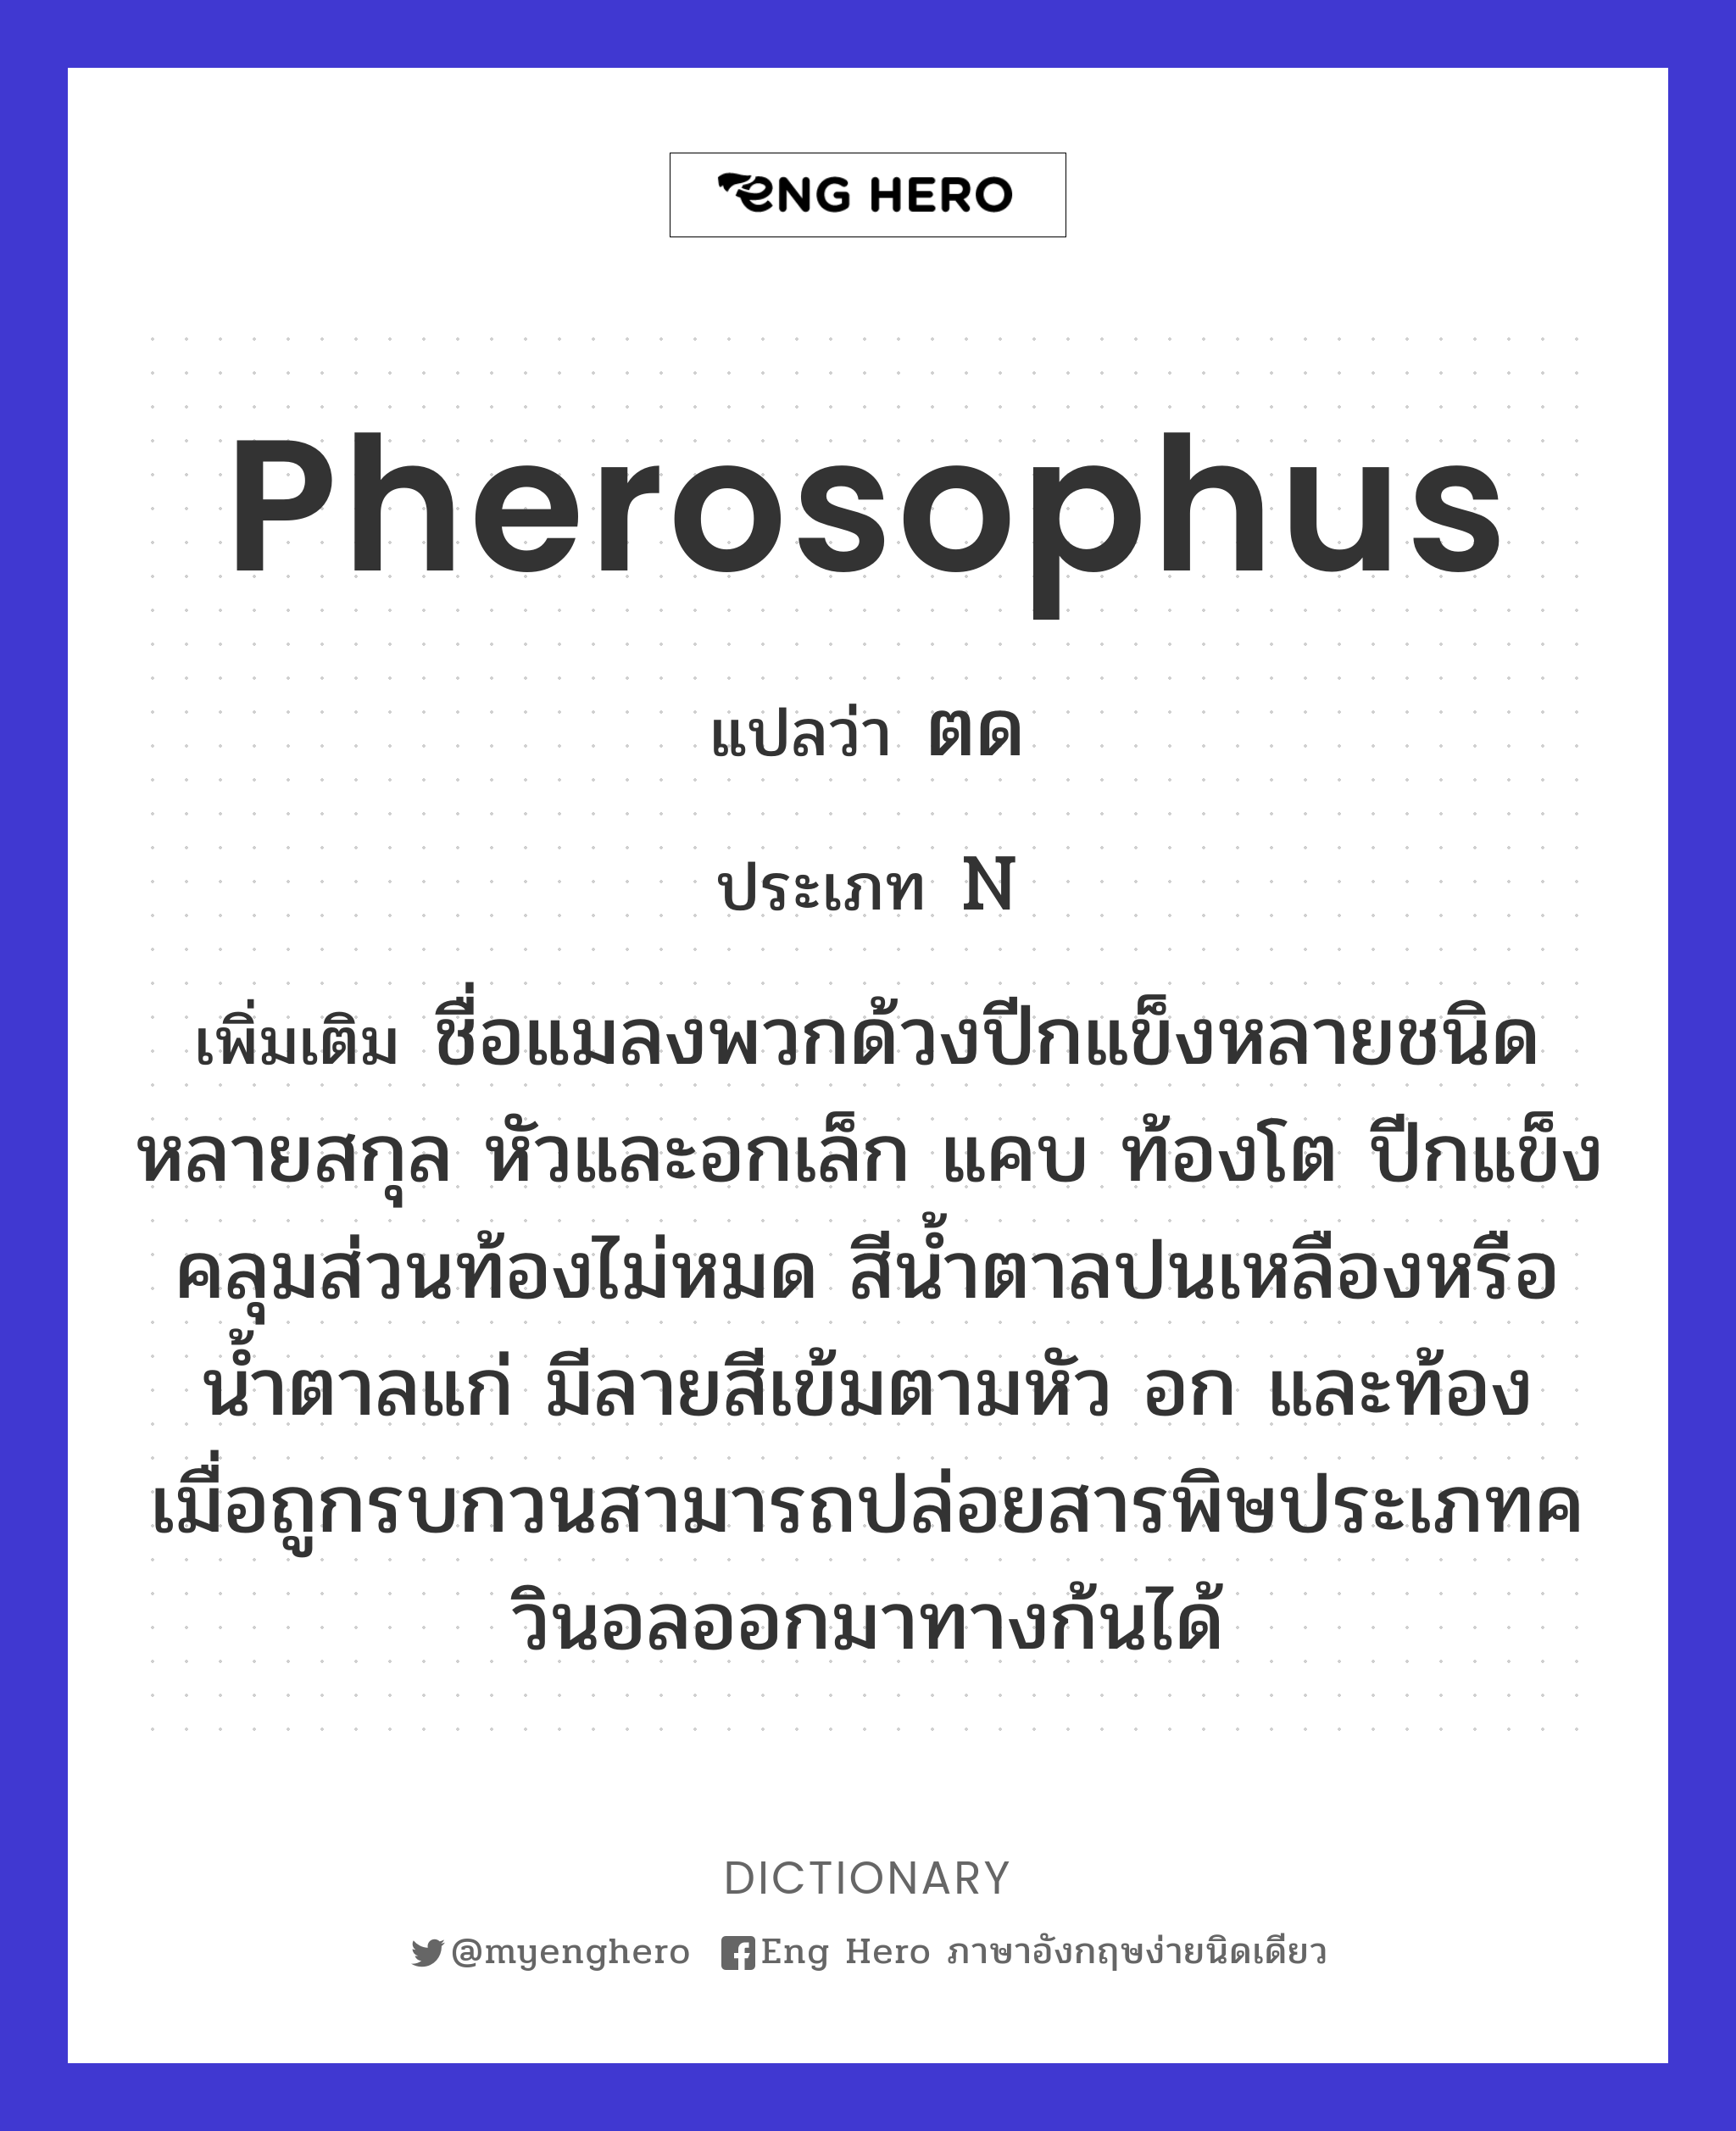 Pherosophus